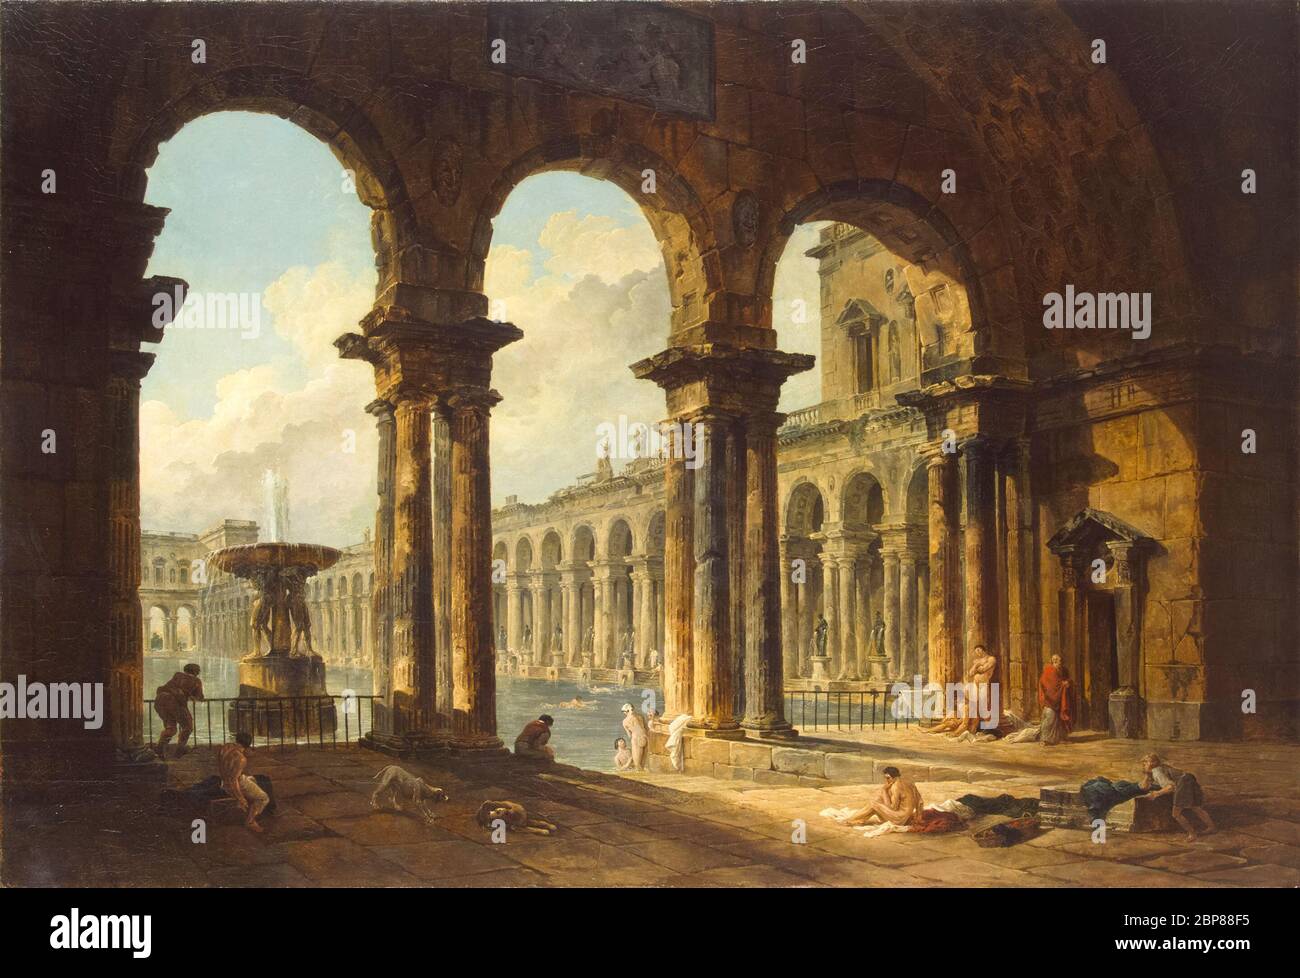 Hubert Robert, Ancient Ruins used as Public Baths, painting, 1798 Stock Photo